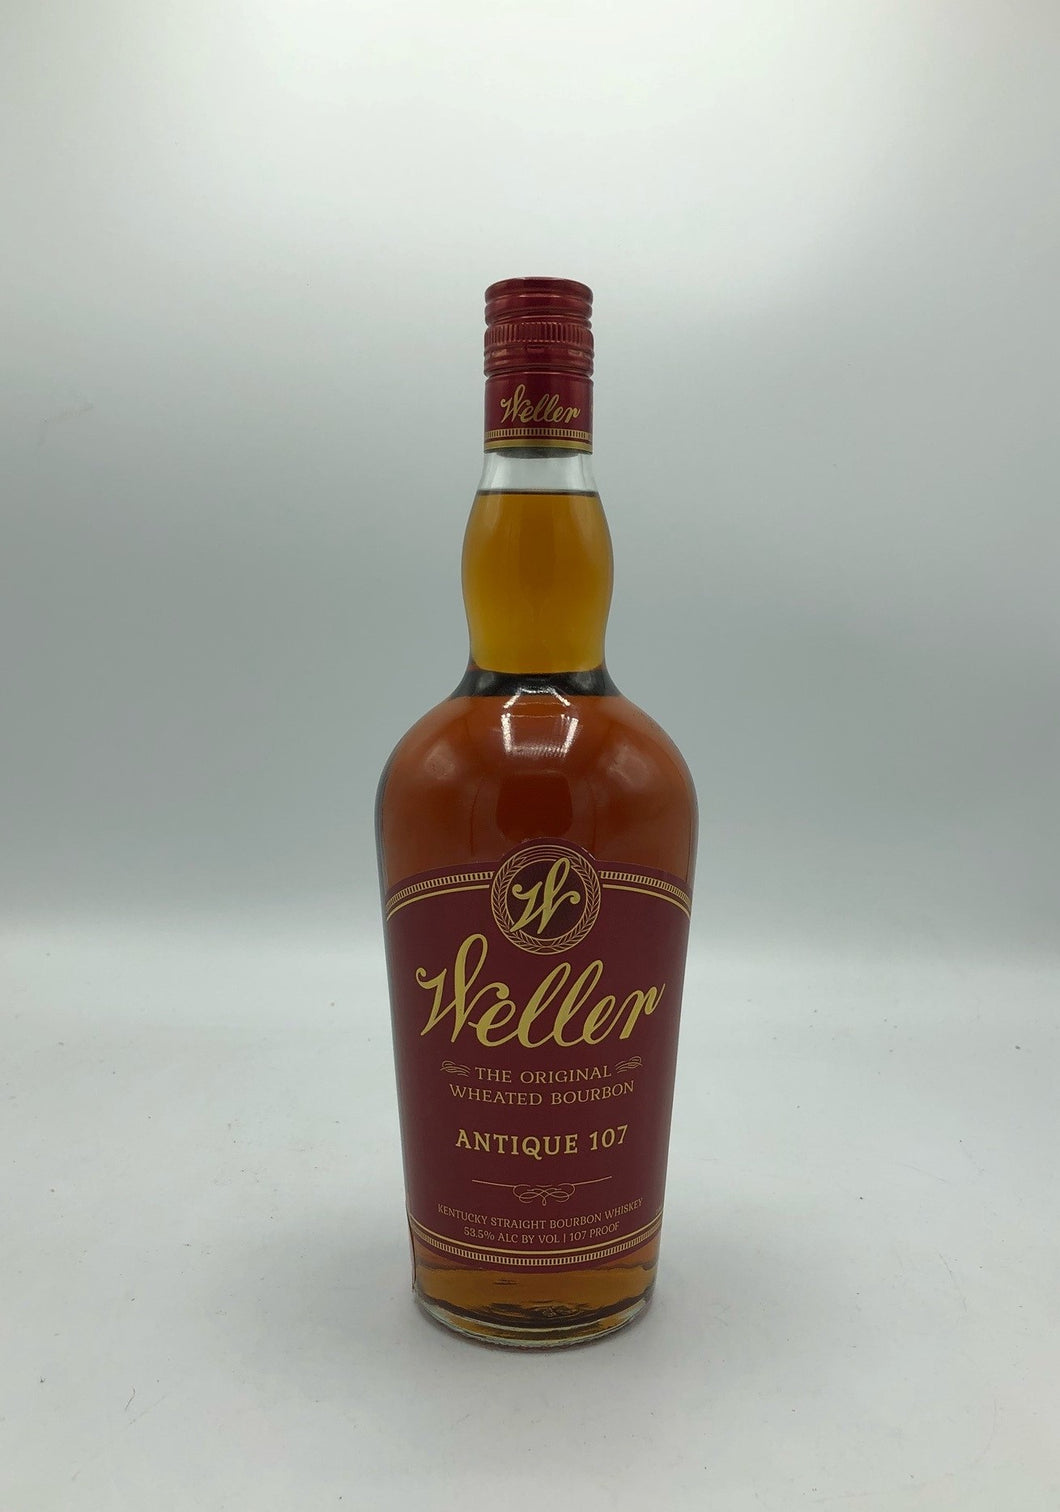 Weller Antique 107 Wheated Bourbon 53.5%